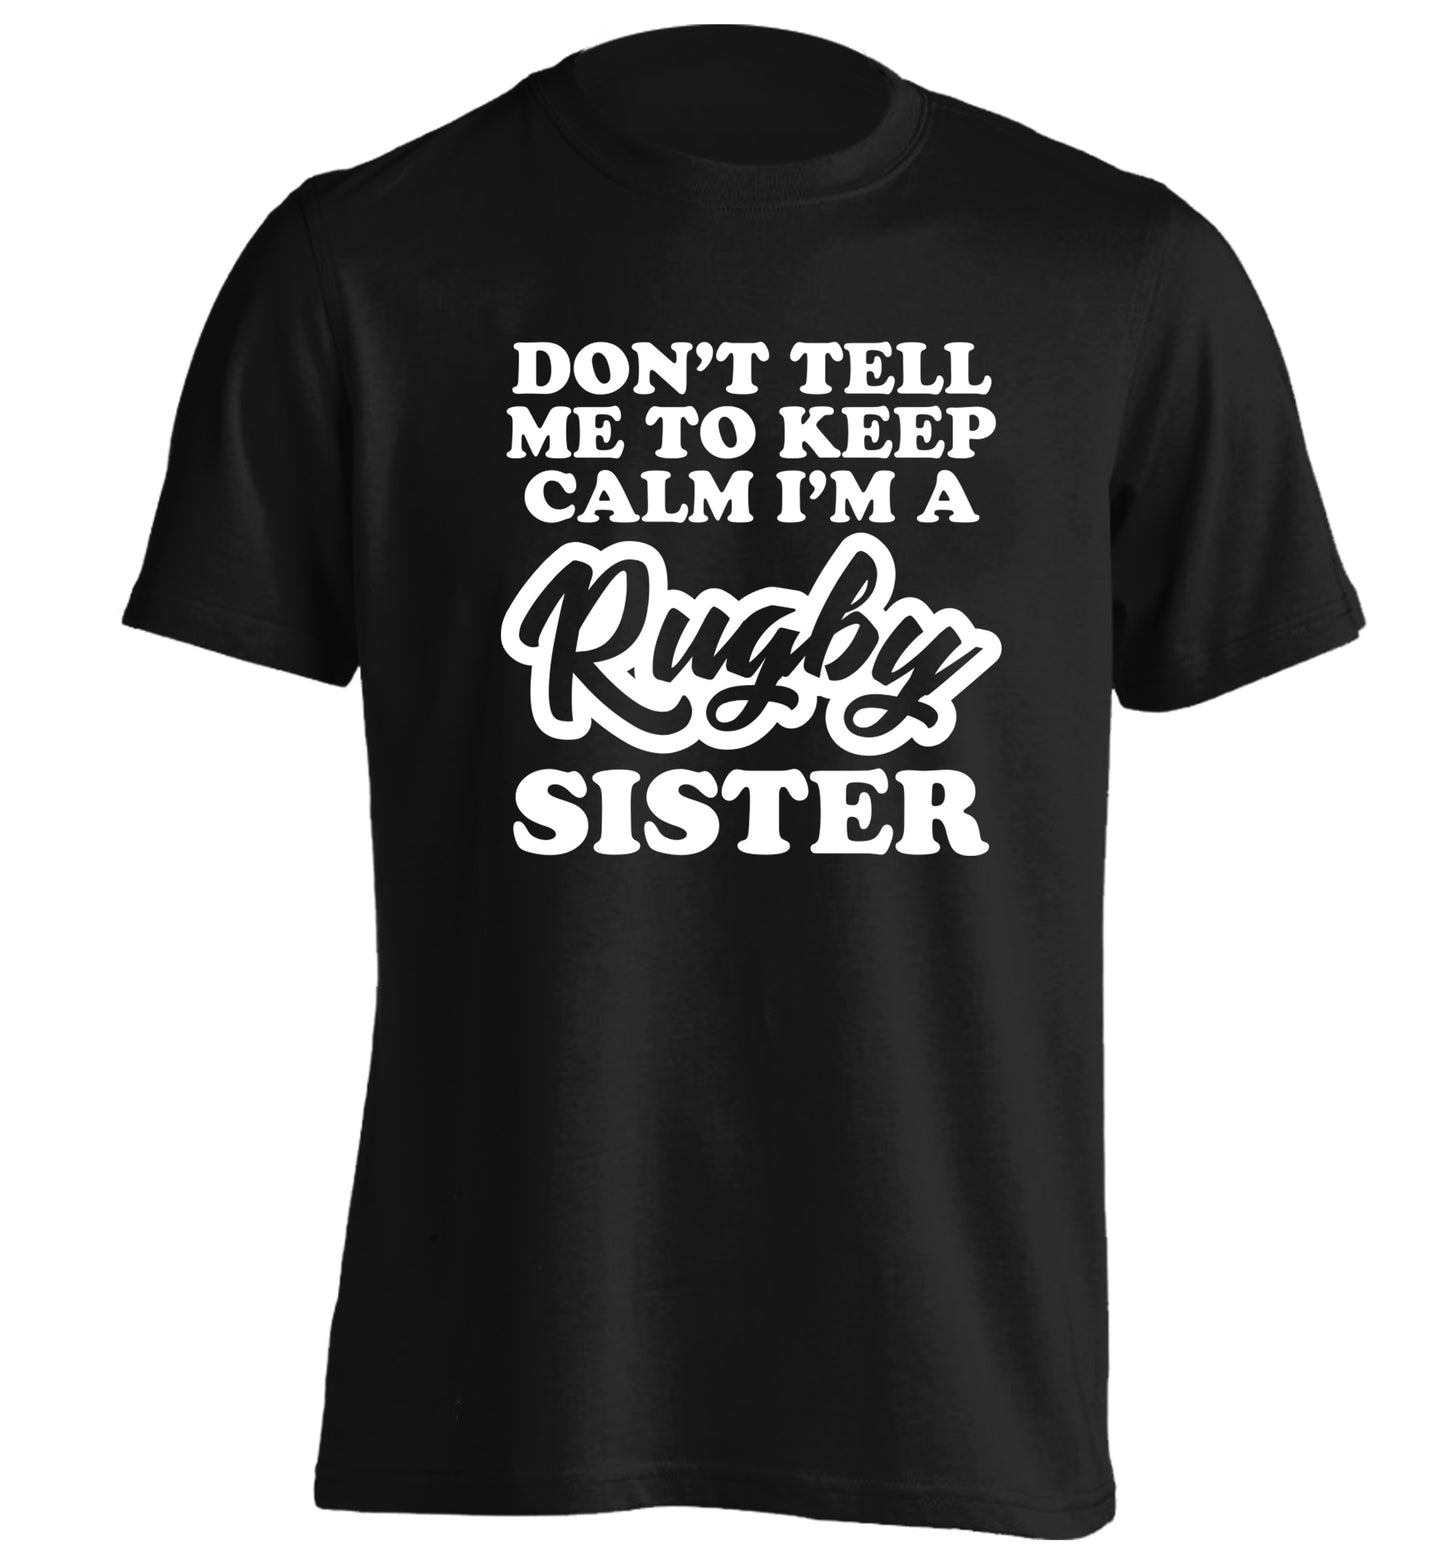 Don't tell me keep calm I'm a rugby sister adults unisex black Tshirt 2XL